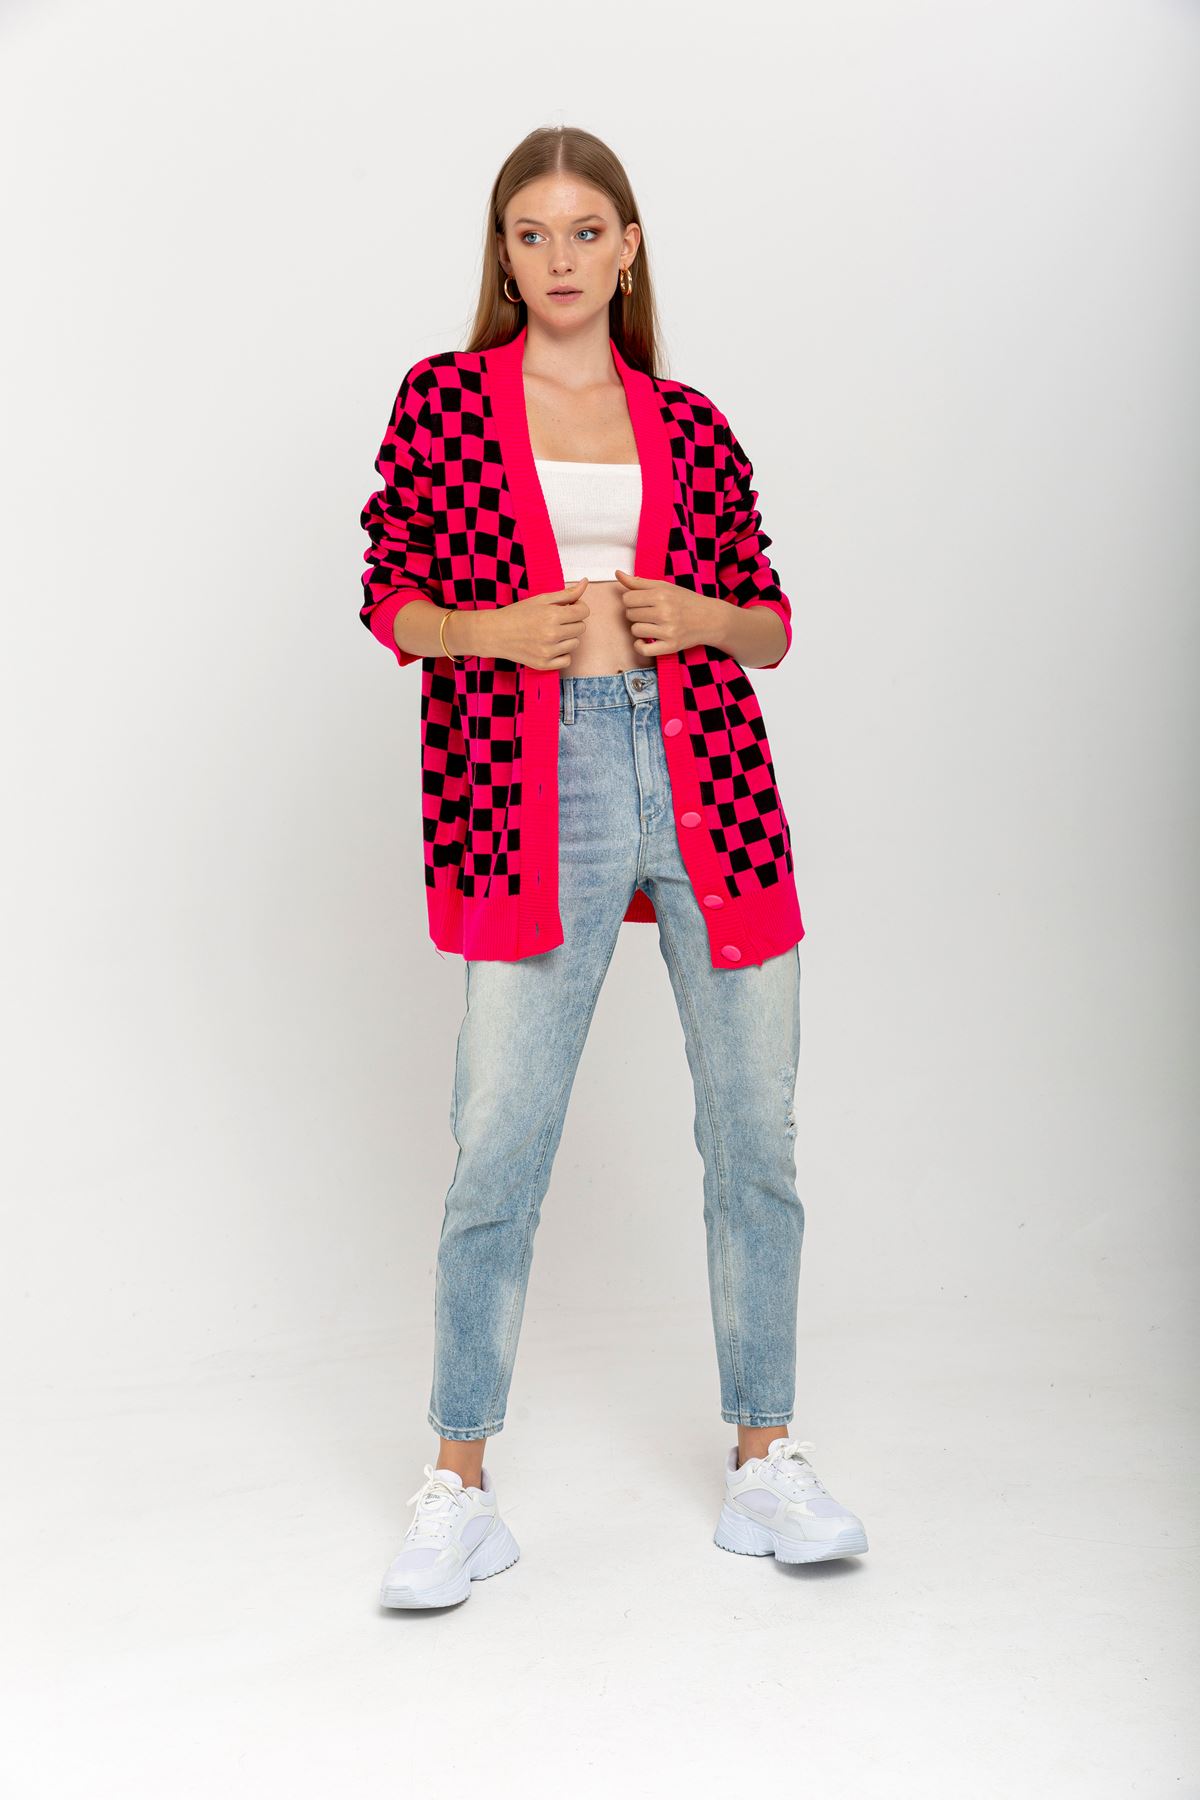 Knitwear Fabric Long Sleeve Without Collar Long Checkerboard Print Women Cardigan - Fuchıa